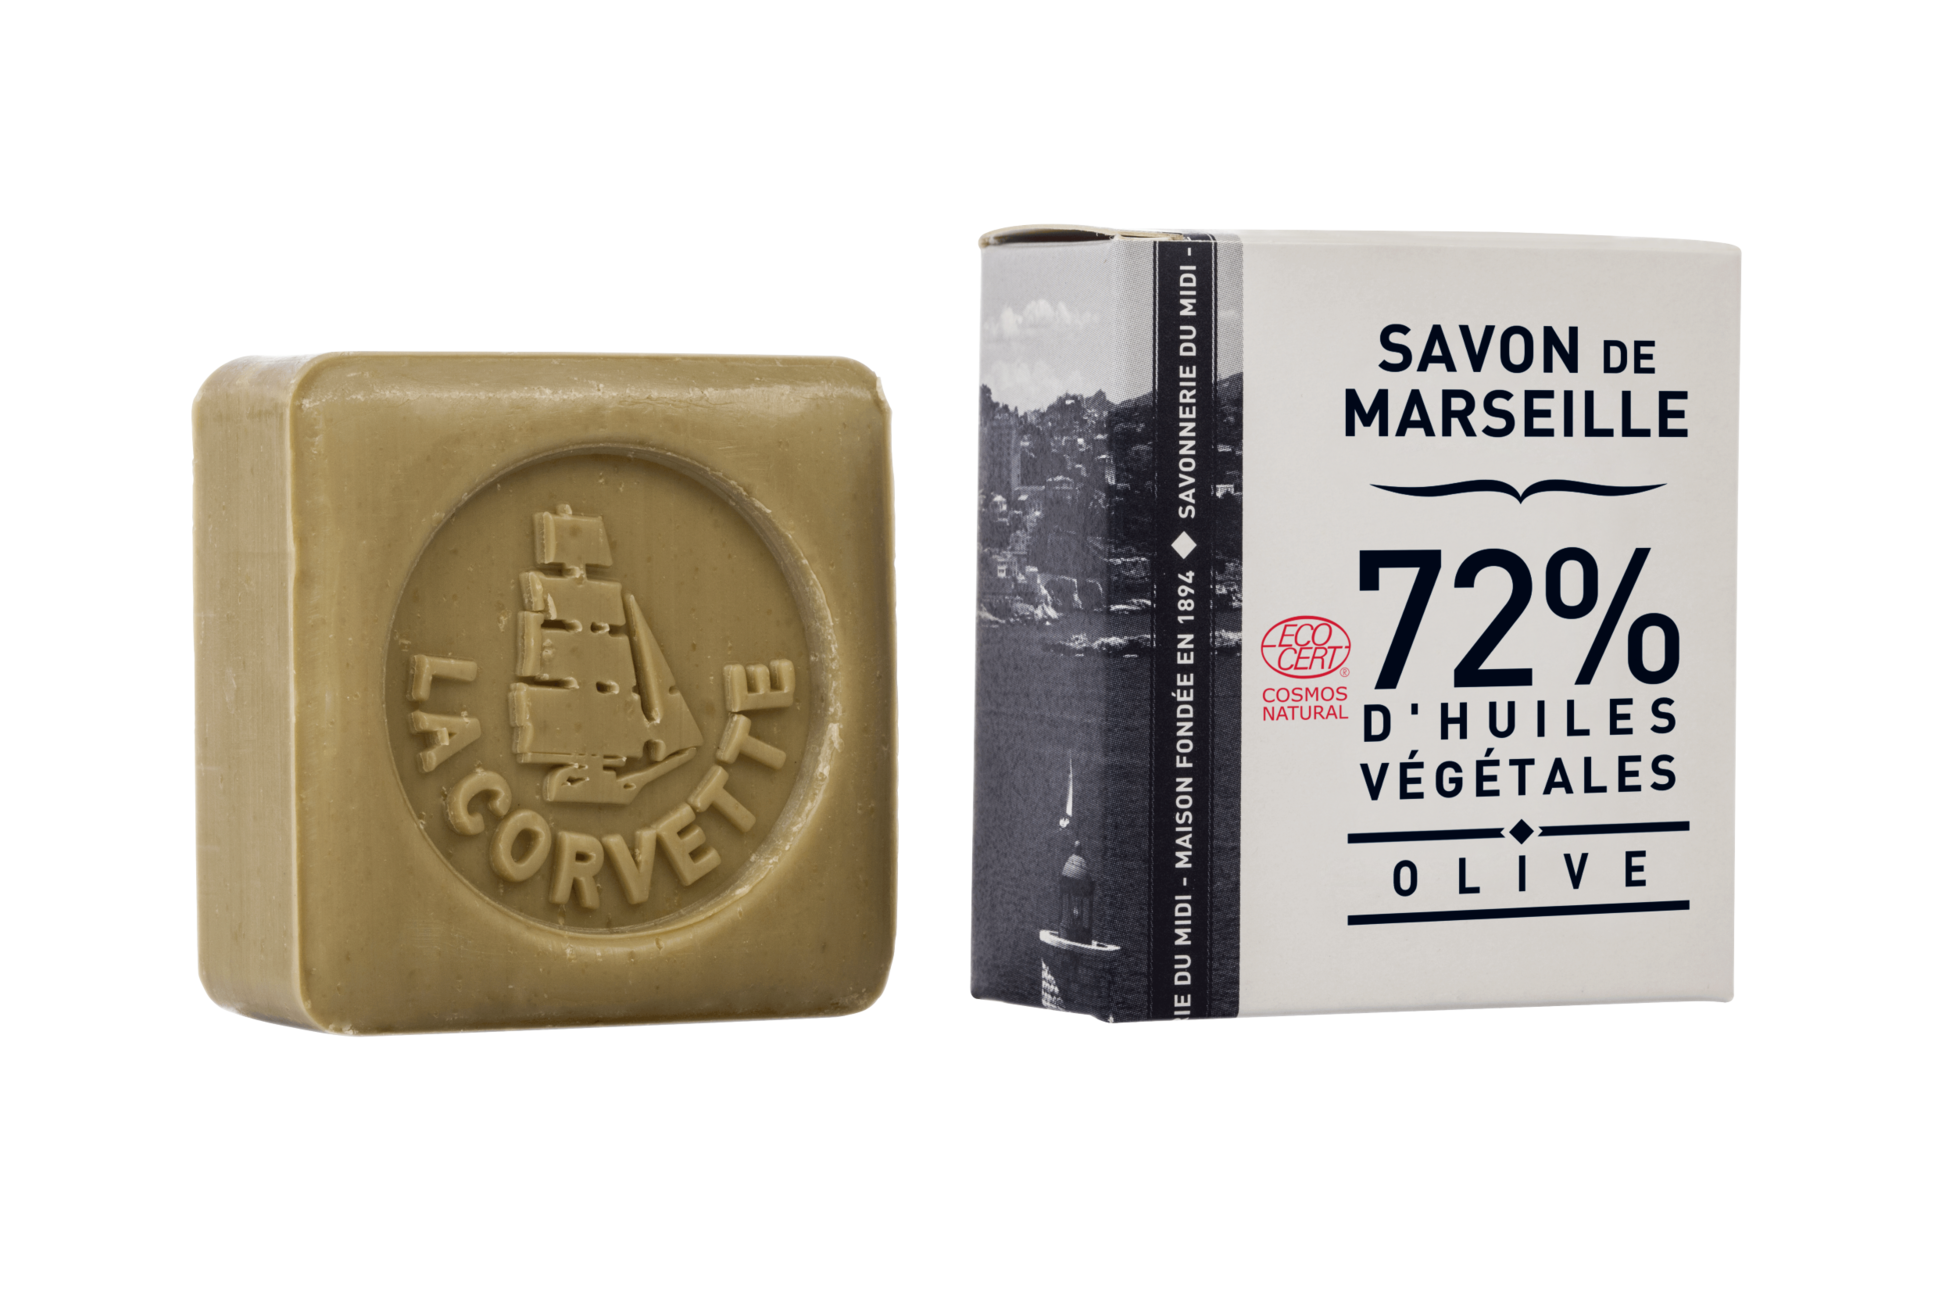 Marseille soap, a natural moth killer